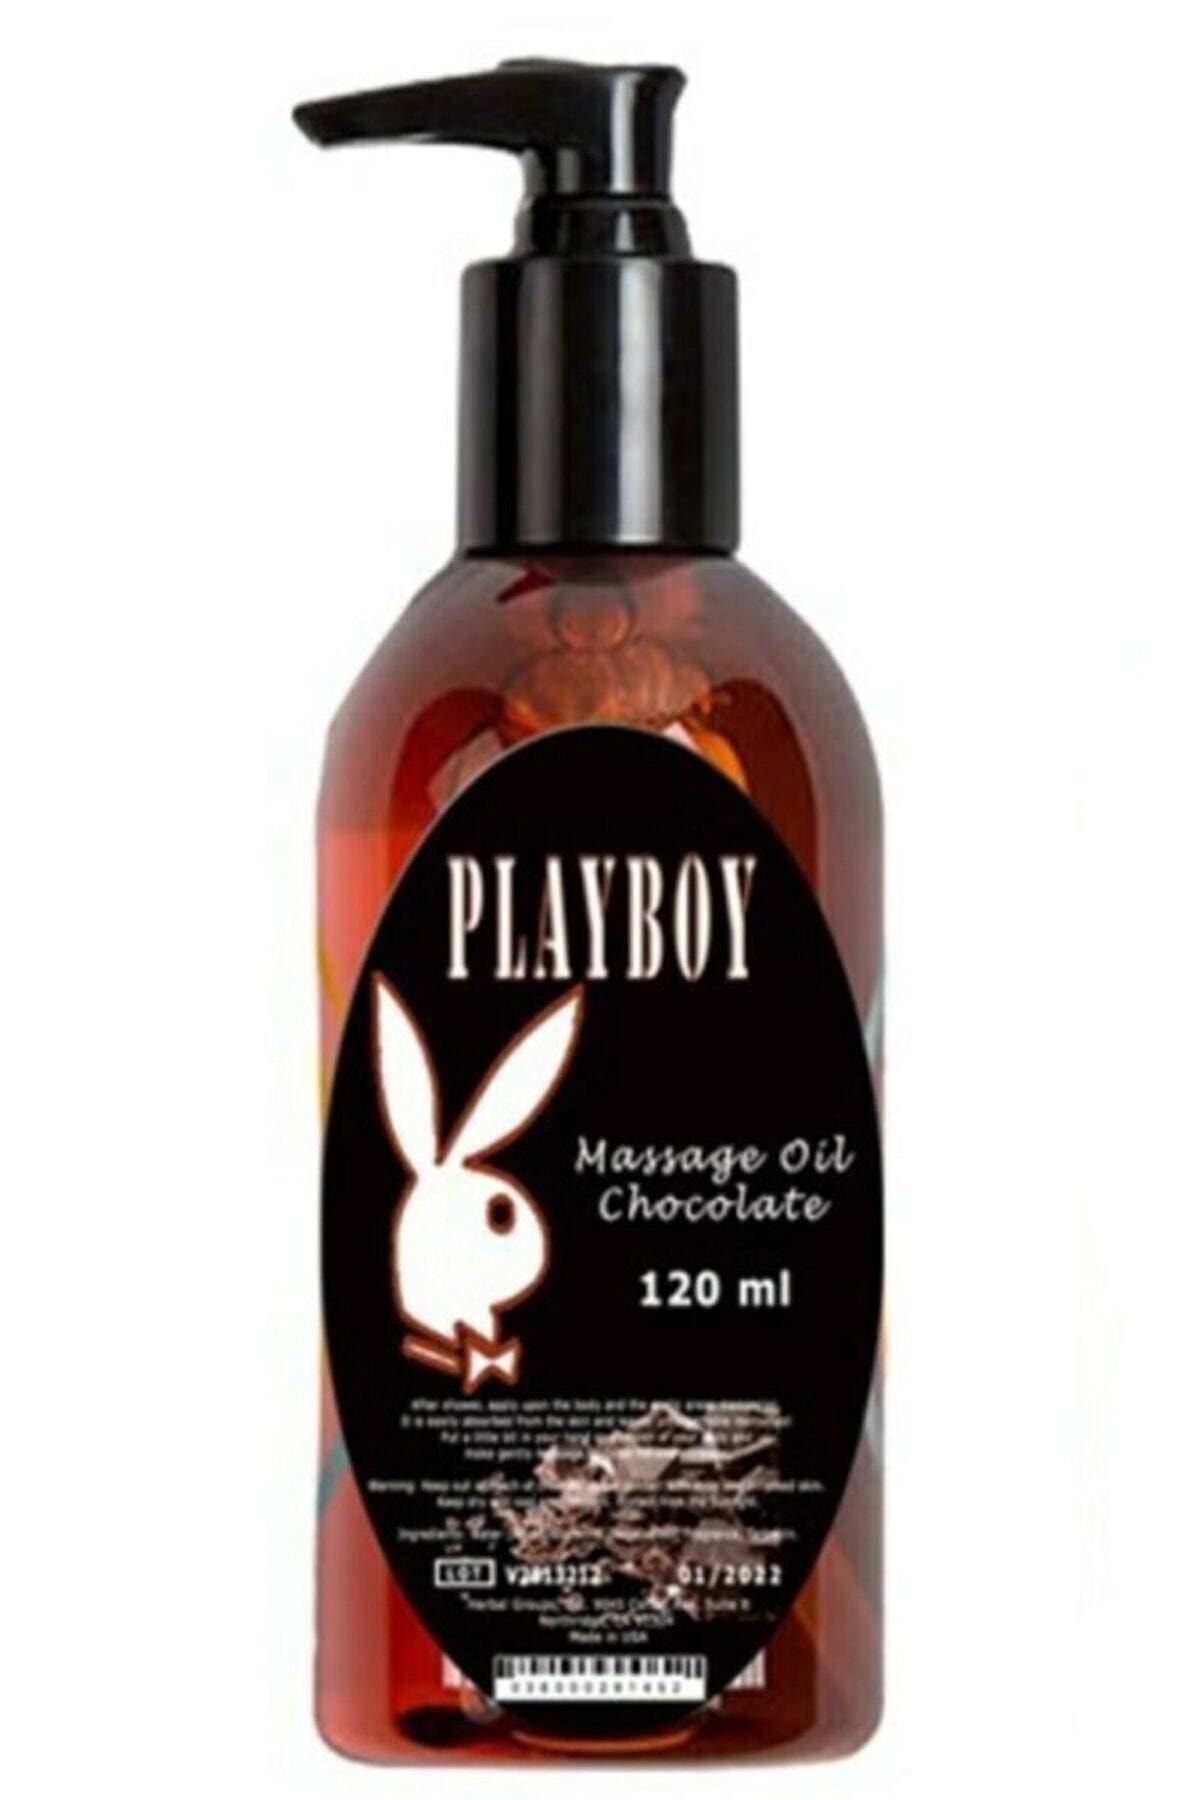 Playboy Çikolata Aromalı Vücut Masaj Yağı 120ml Chocolate Flavored Massage Oil